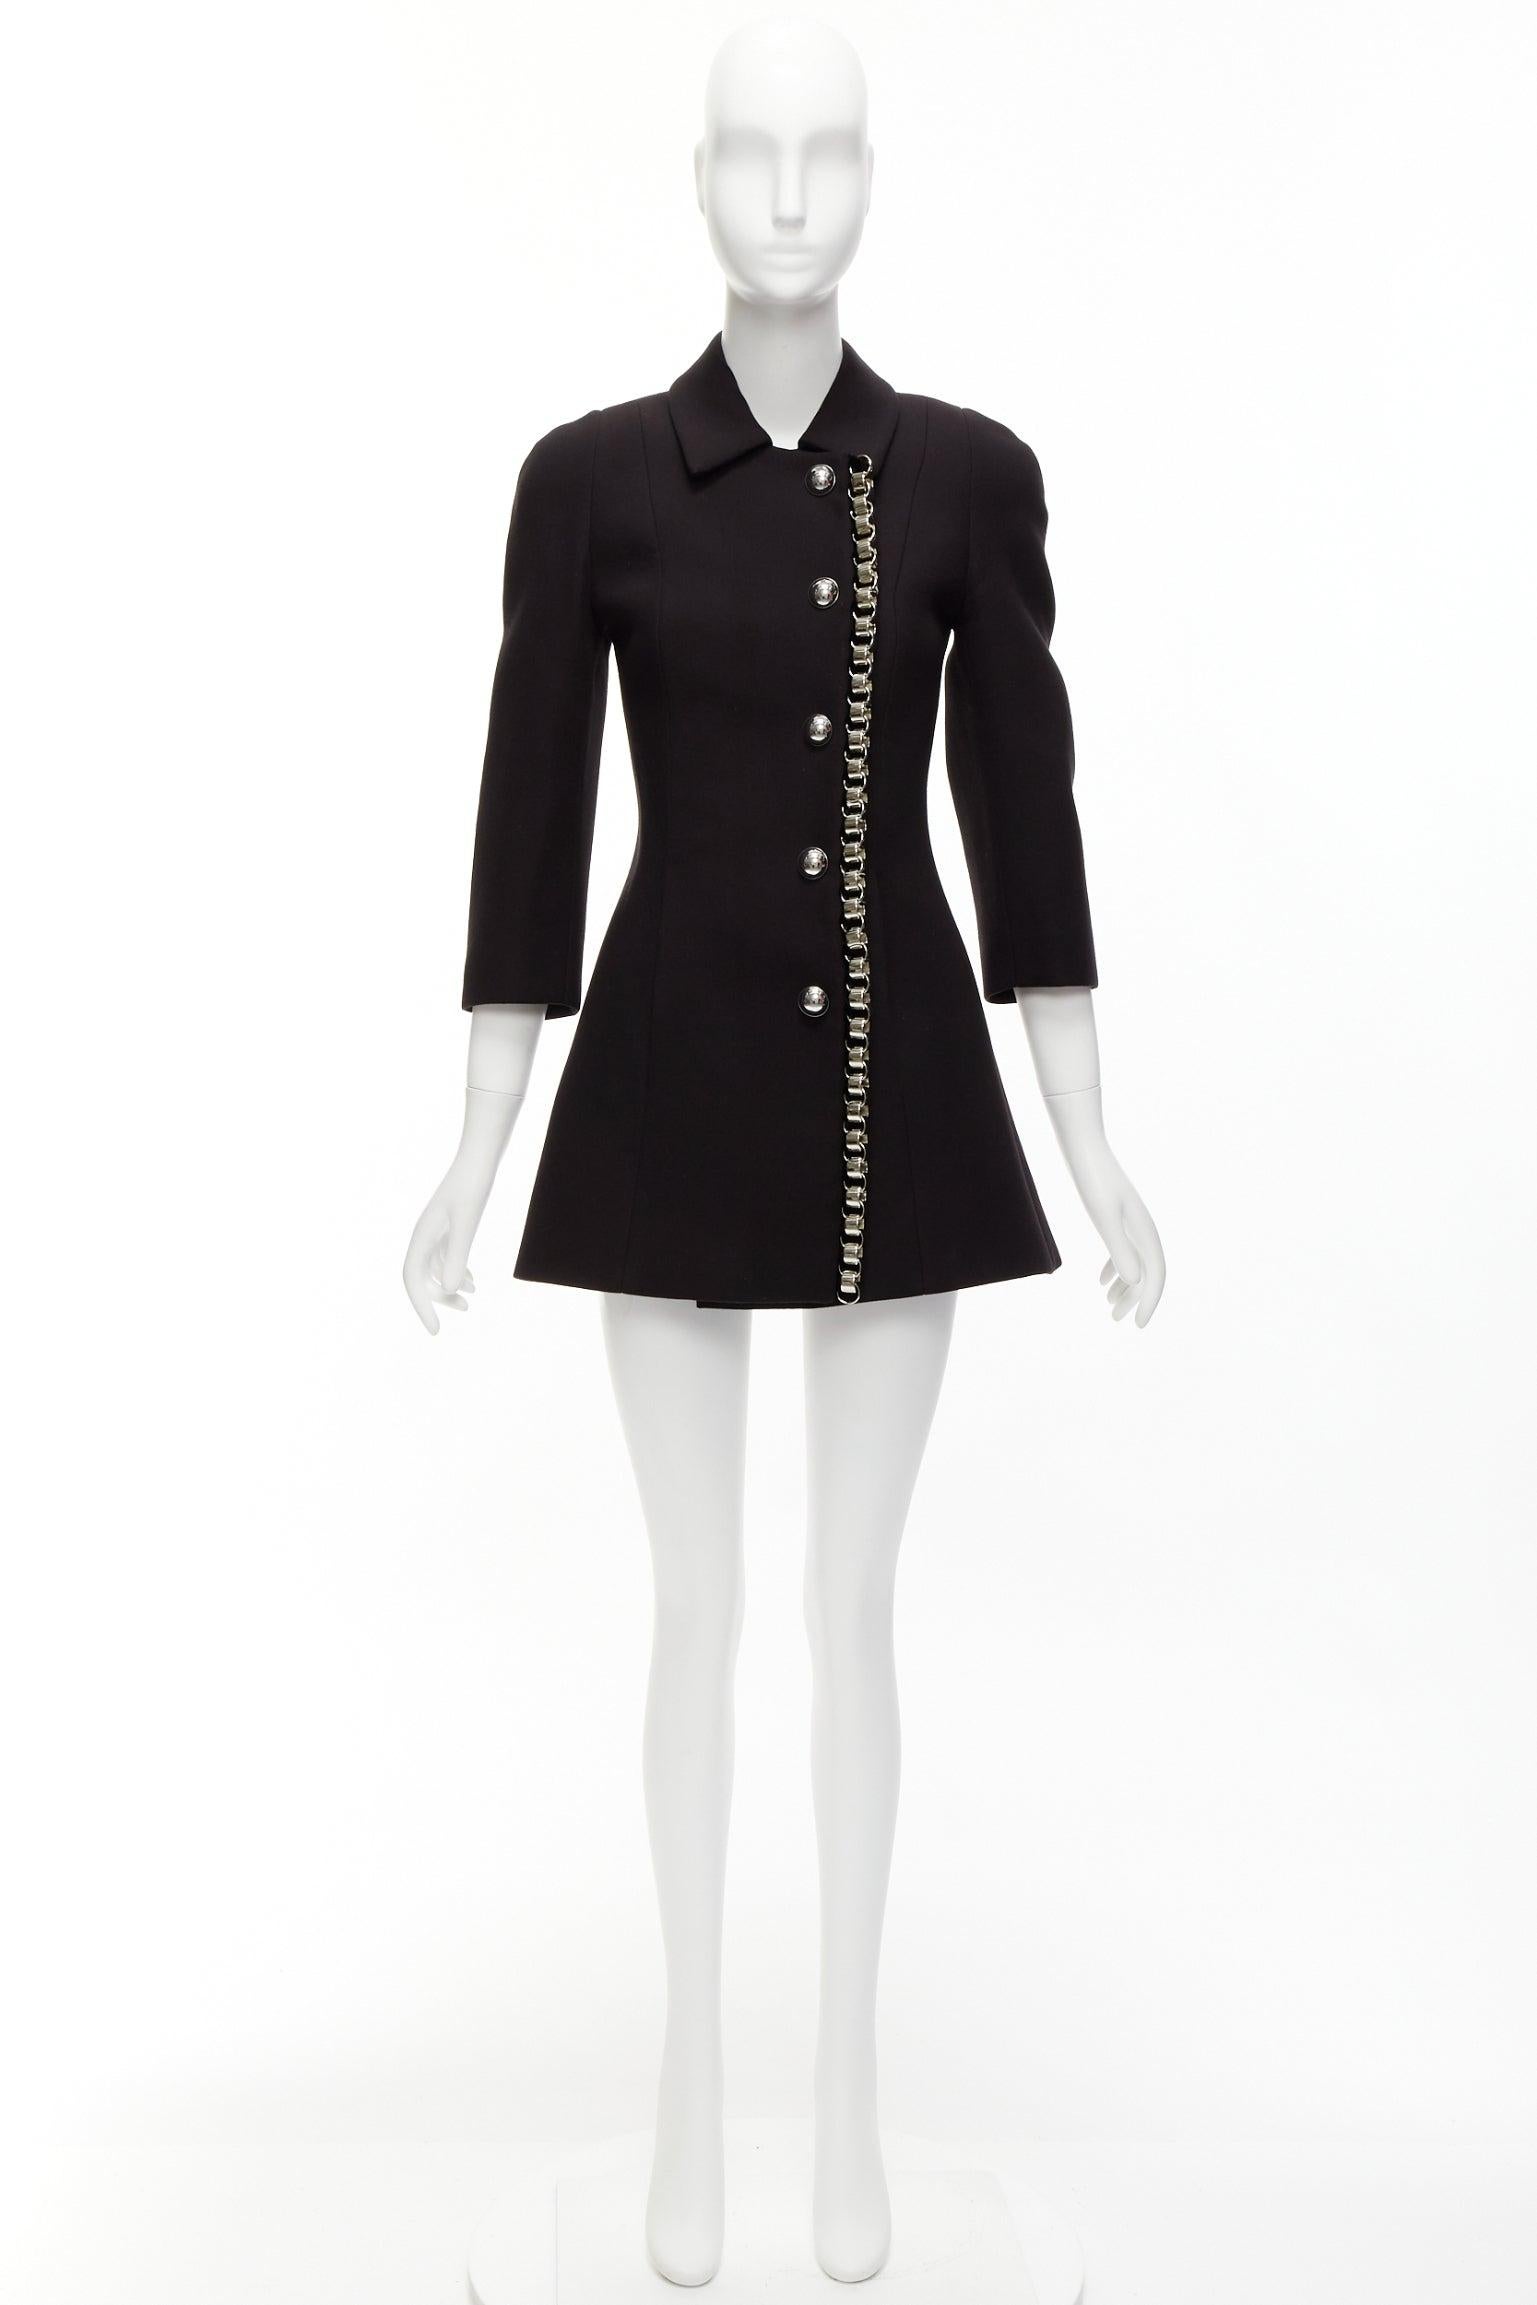 DAVID KOMA Runway Cady chunky chain trim black fit flare coat dress UK6 XS For Sale 6